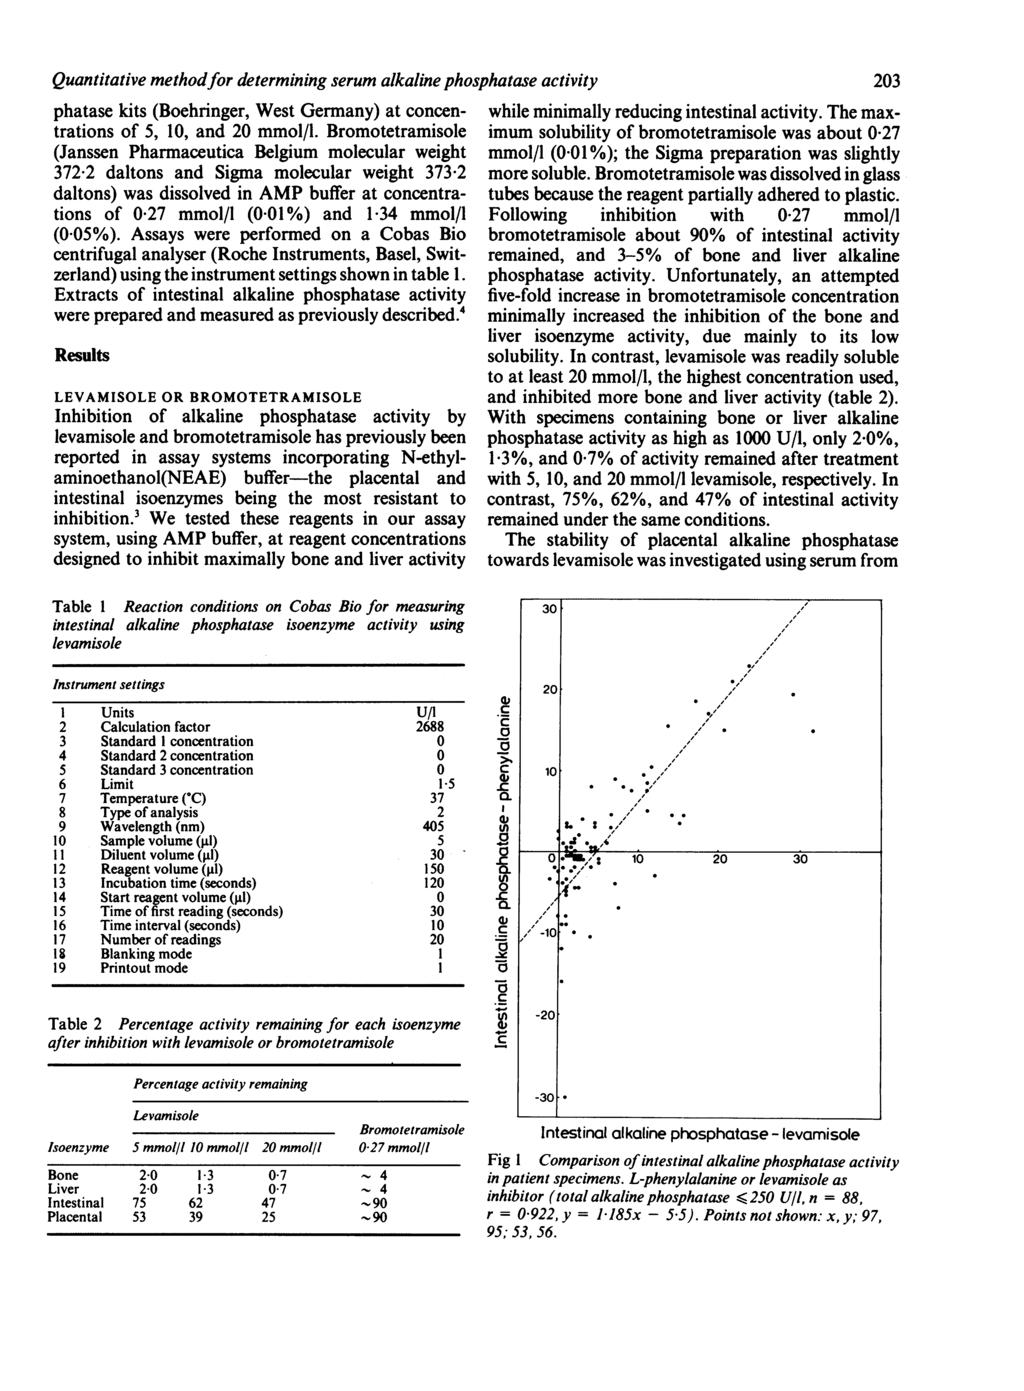 Quntittive methodfor determining serum lkline phosphtse ctivity phtse kits (Boehringer, West Germny) t concentrtions of 5, 10, nd 20 mmol/l.